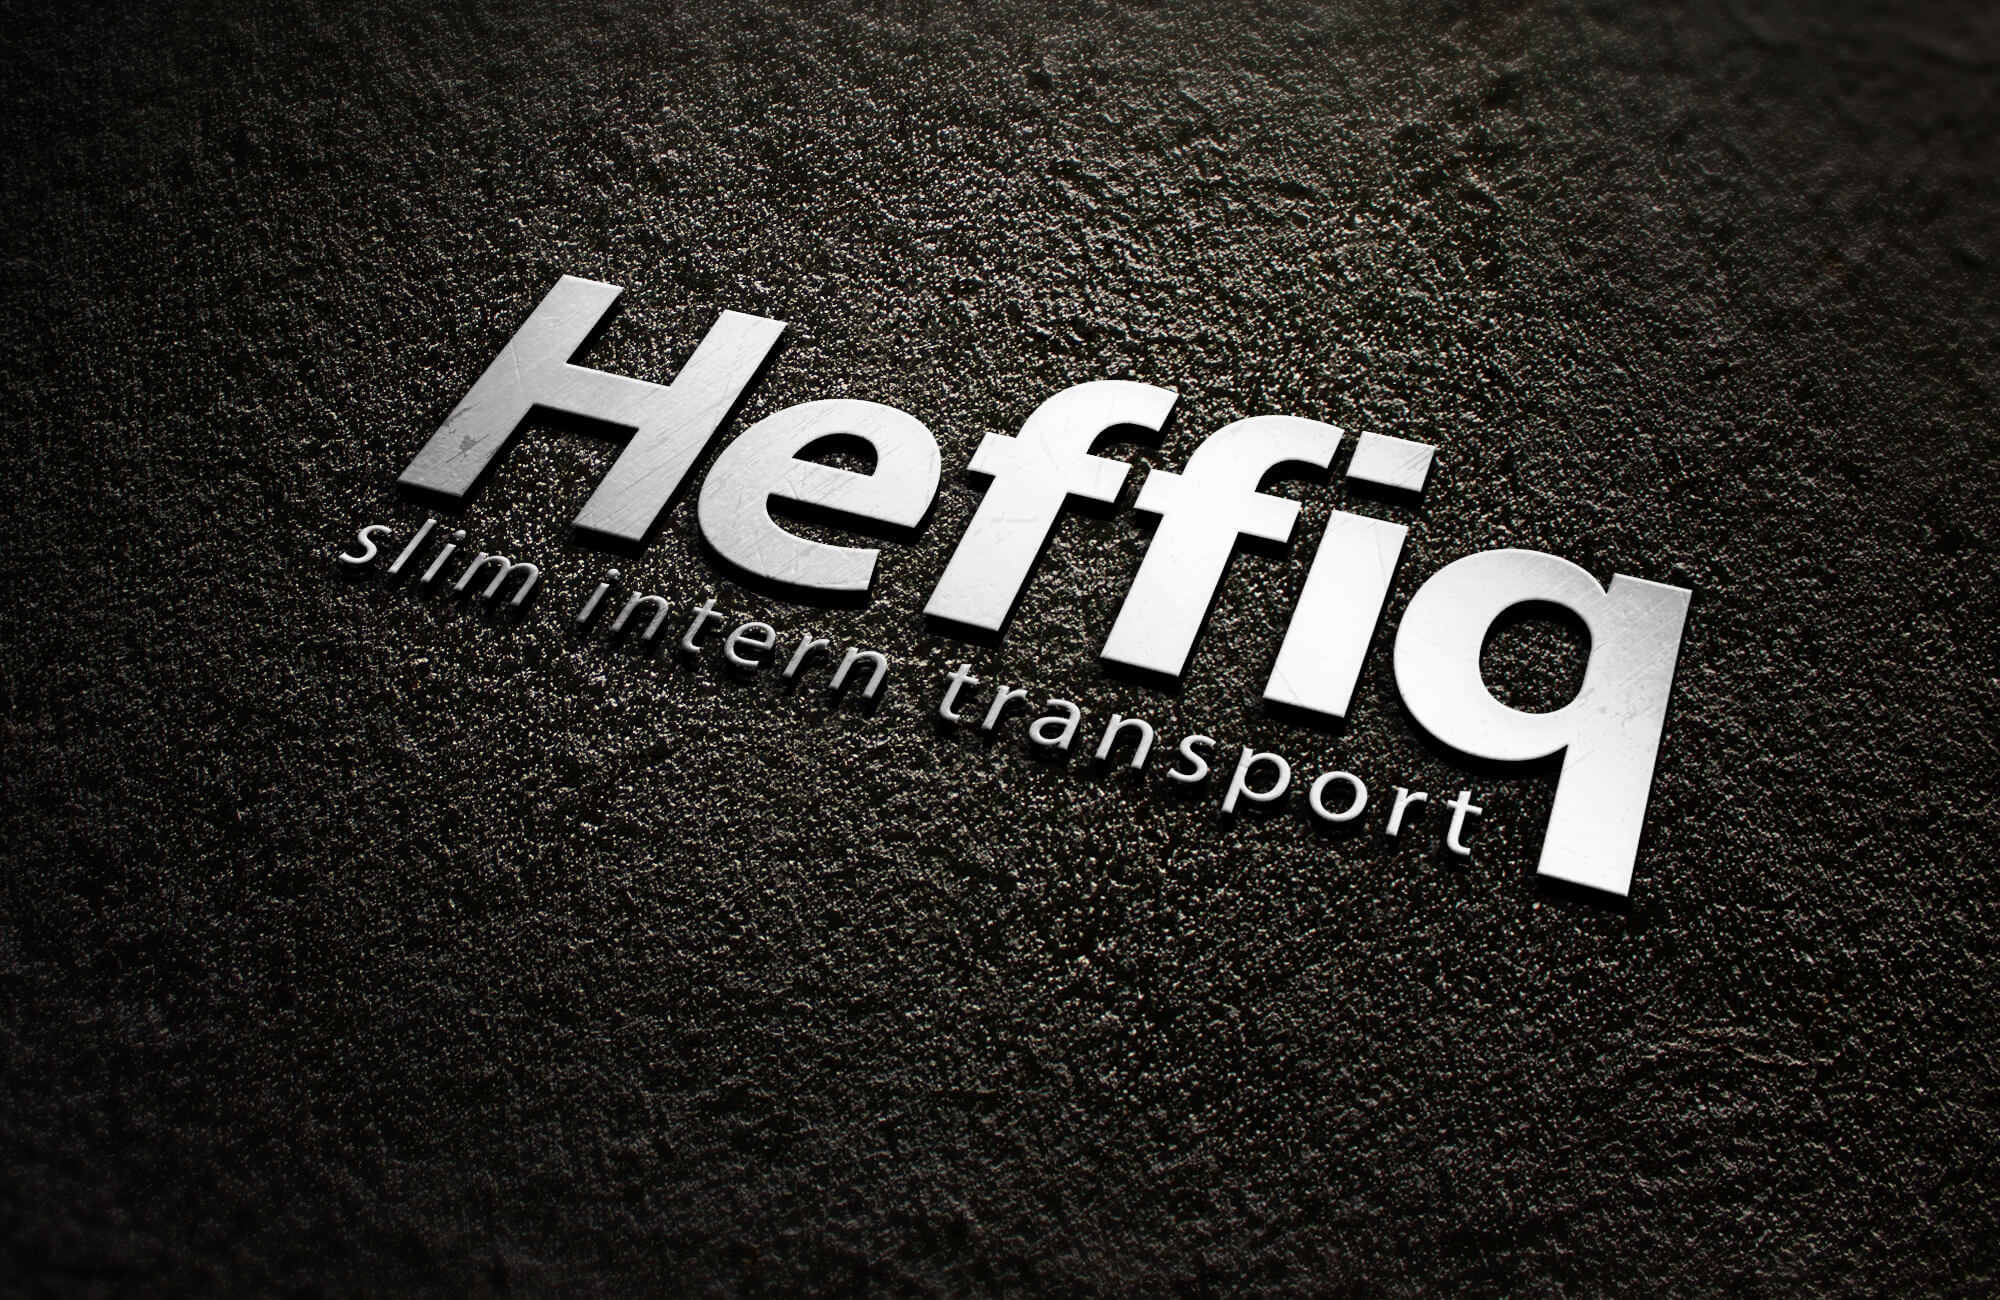 Heffiq Logo Design Green Creatives